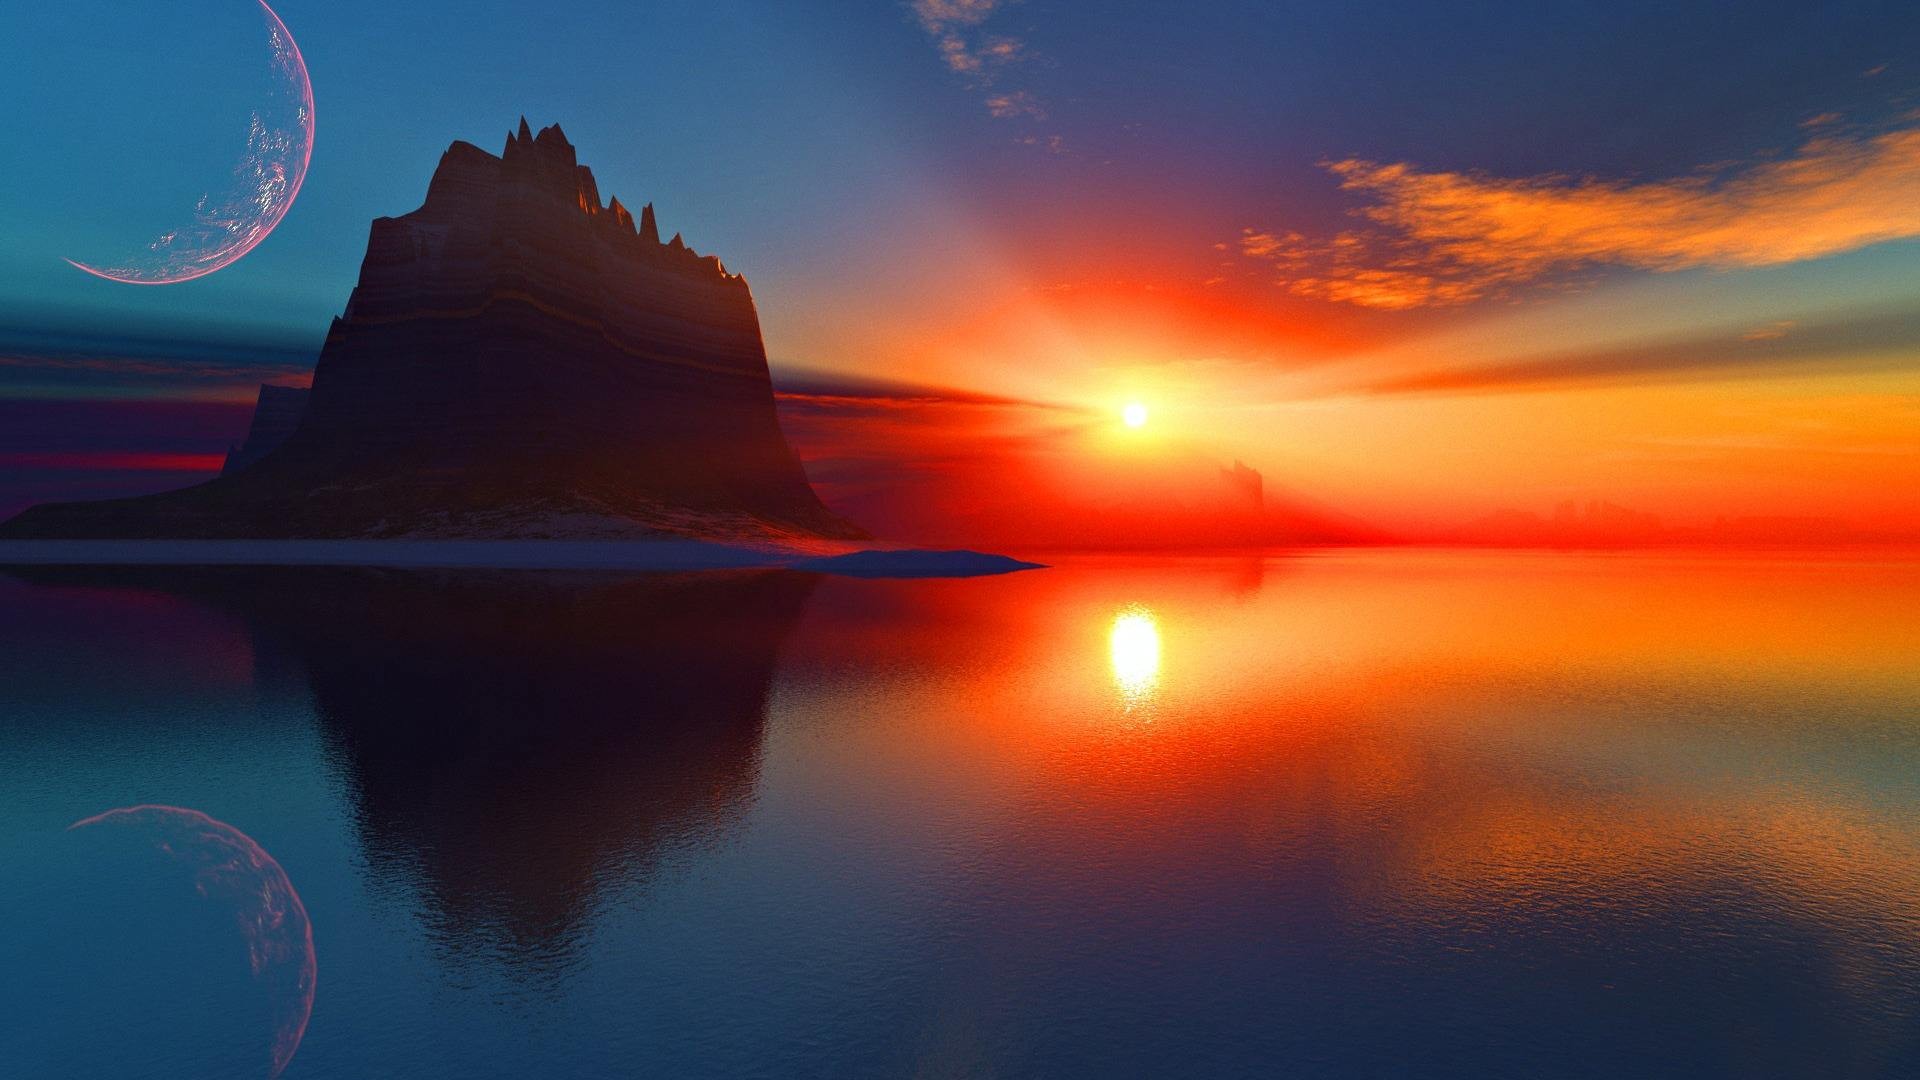 sunset wallpaper for desktop background Daily pics